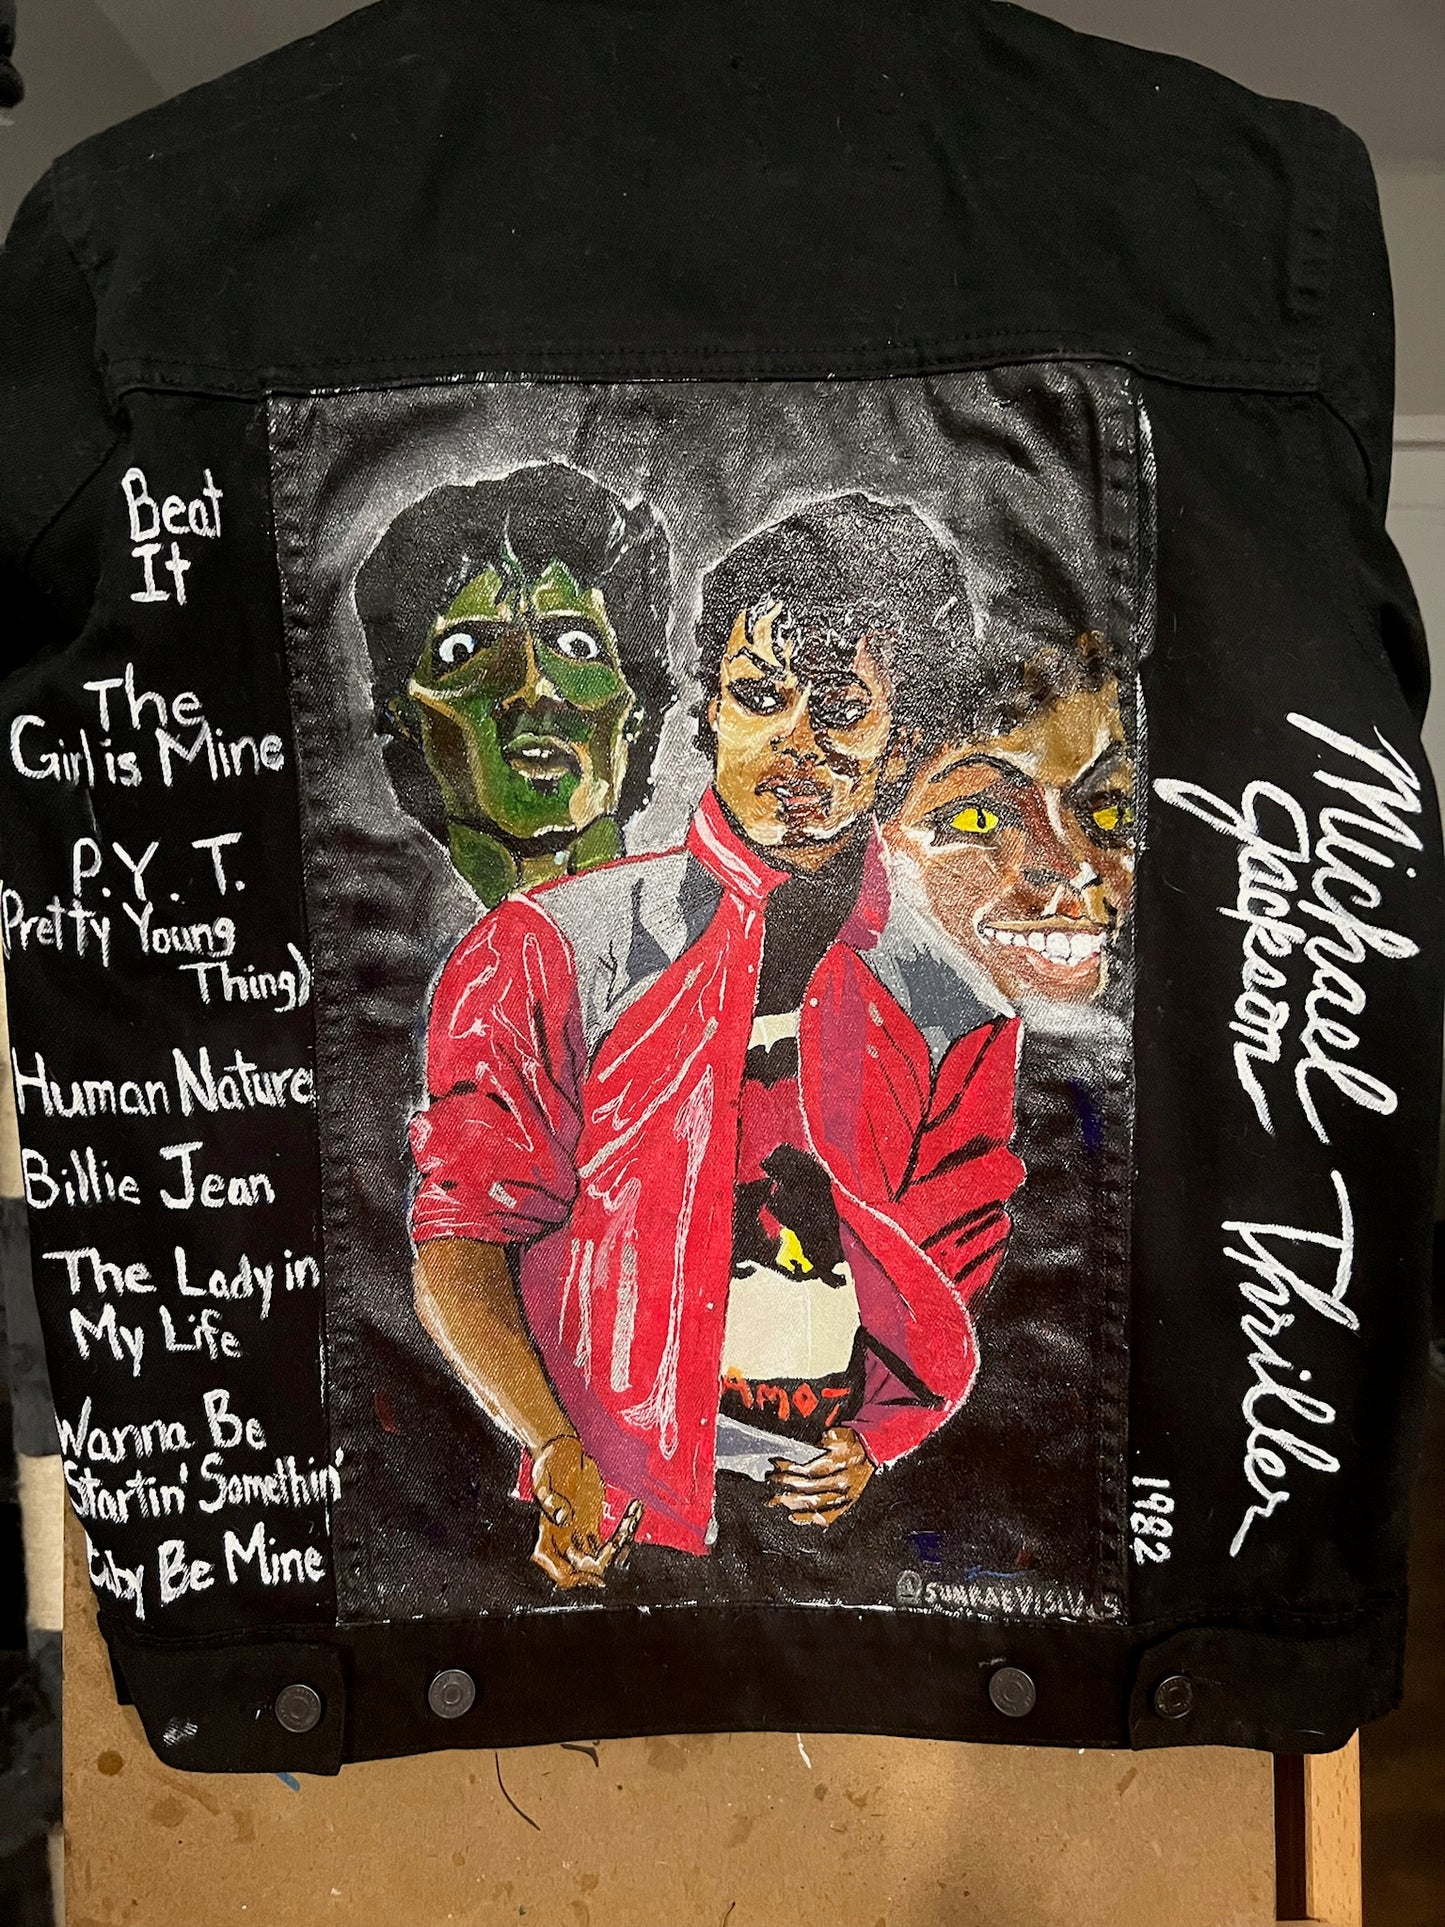 "King of Pop - MJ Tribute" Hand-Painted Denim Jacket - Your Favorite Michael Jackson Portrait